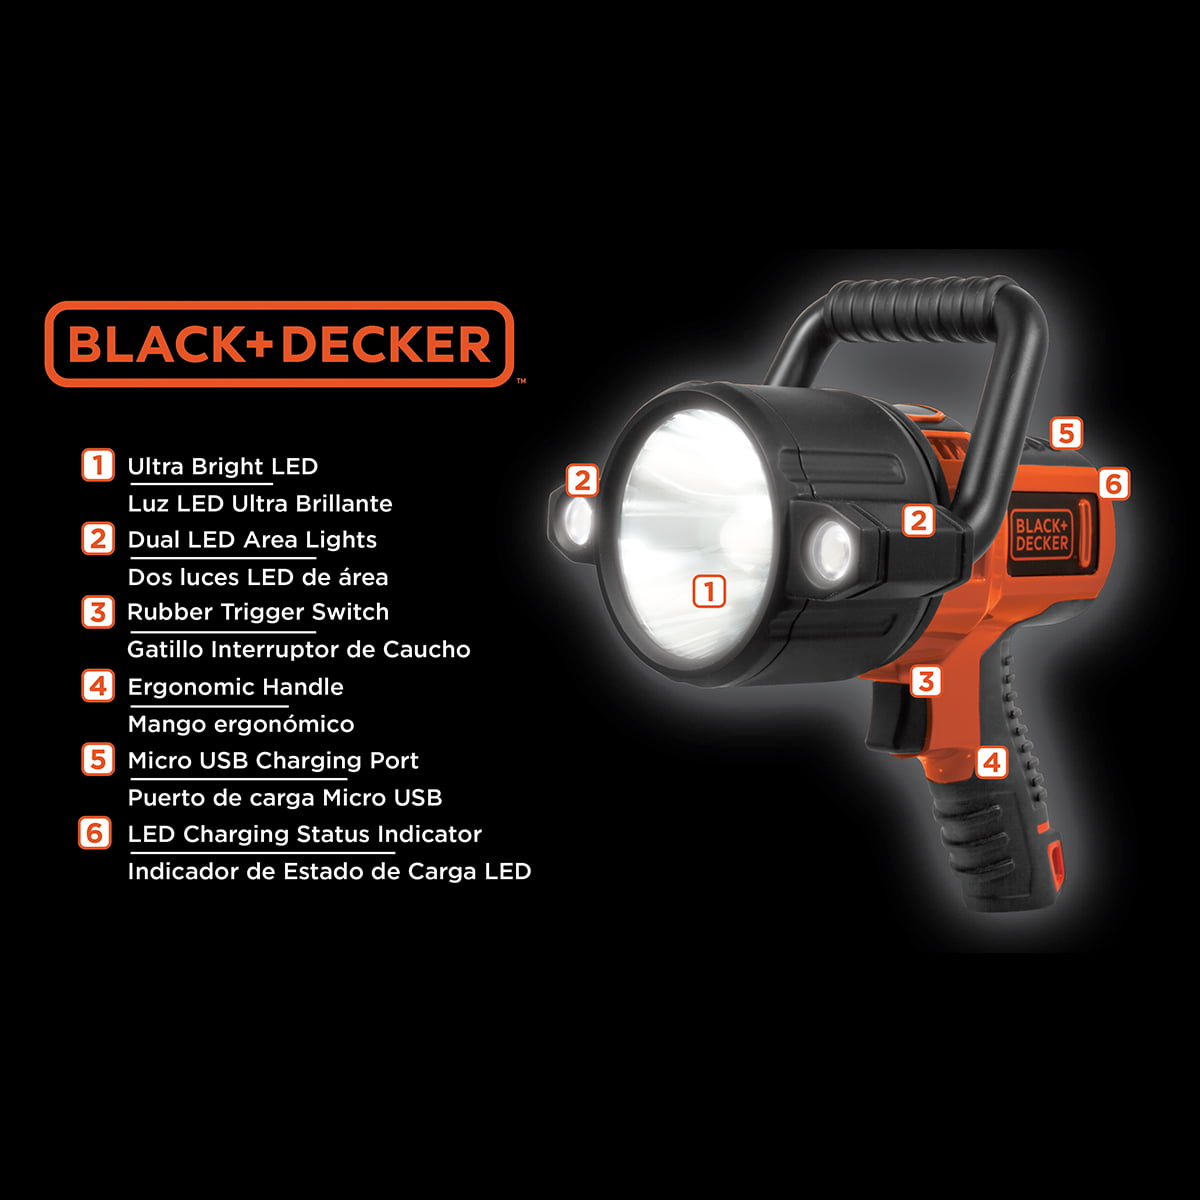 Black & Decker Spotlight from Wal-Mart 4AA batteries - Photo Heavy